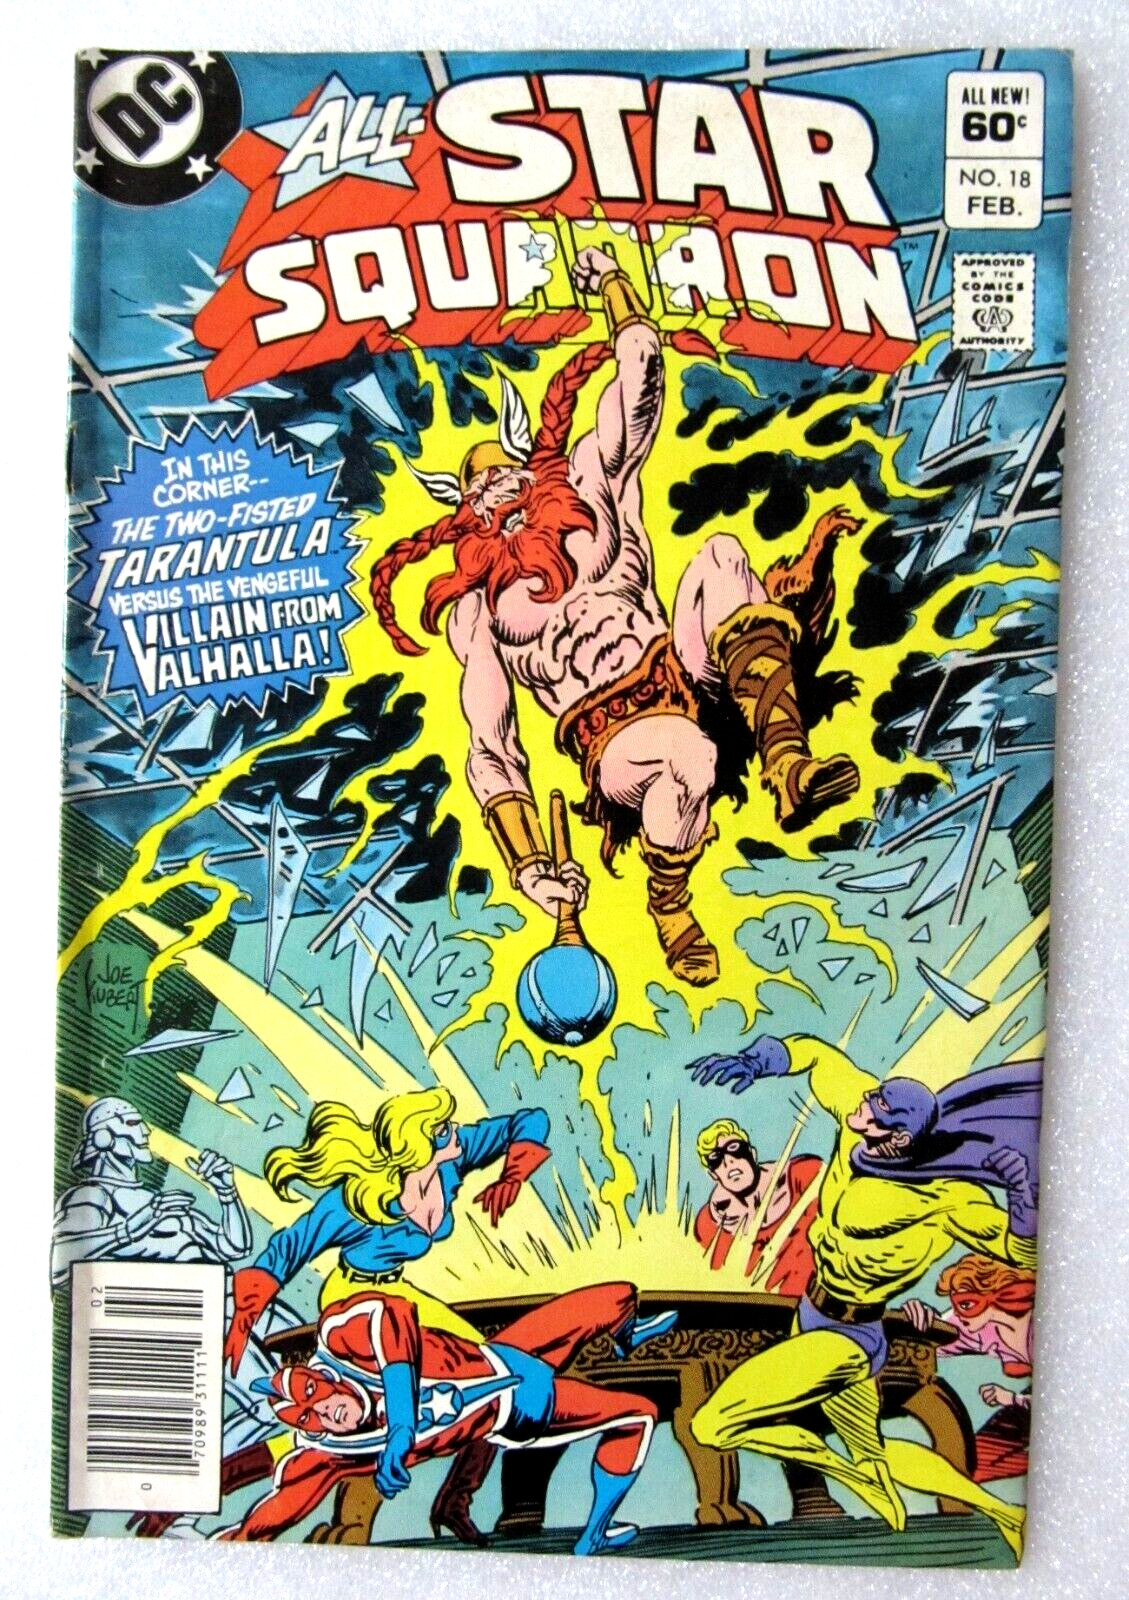 ALL-STAR SQUADRON #18 - COPPER AGE DC COMIC - JOE KUBERT COVER